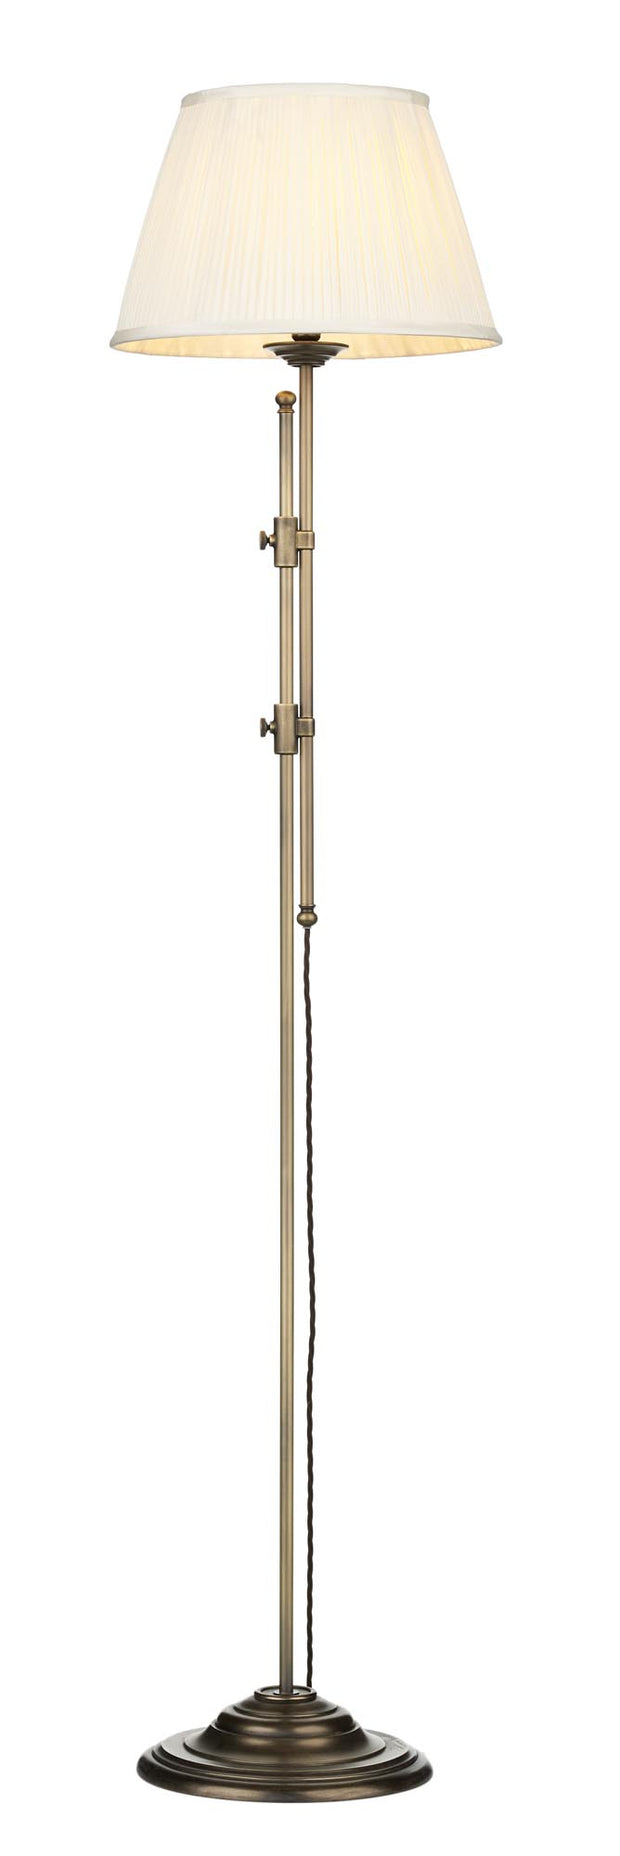 David Hunt Chester CHE4975 Antique Brass Adjustable Floor Lamp - Base Only